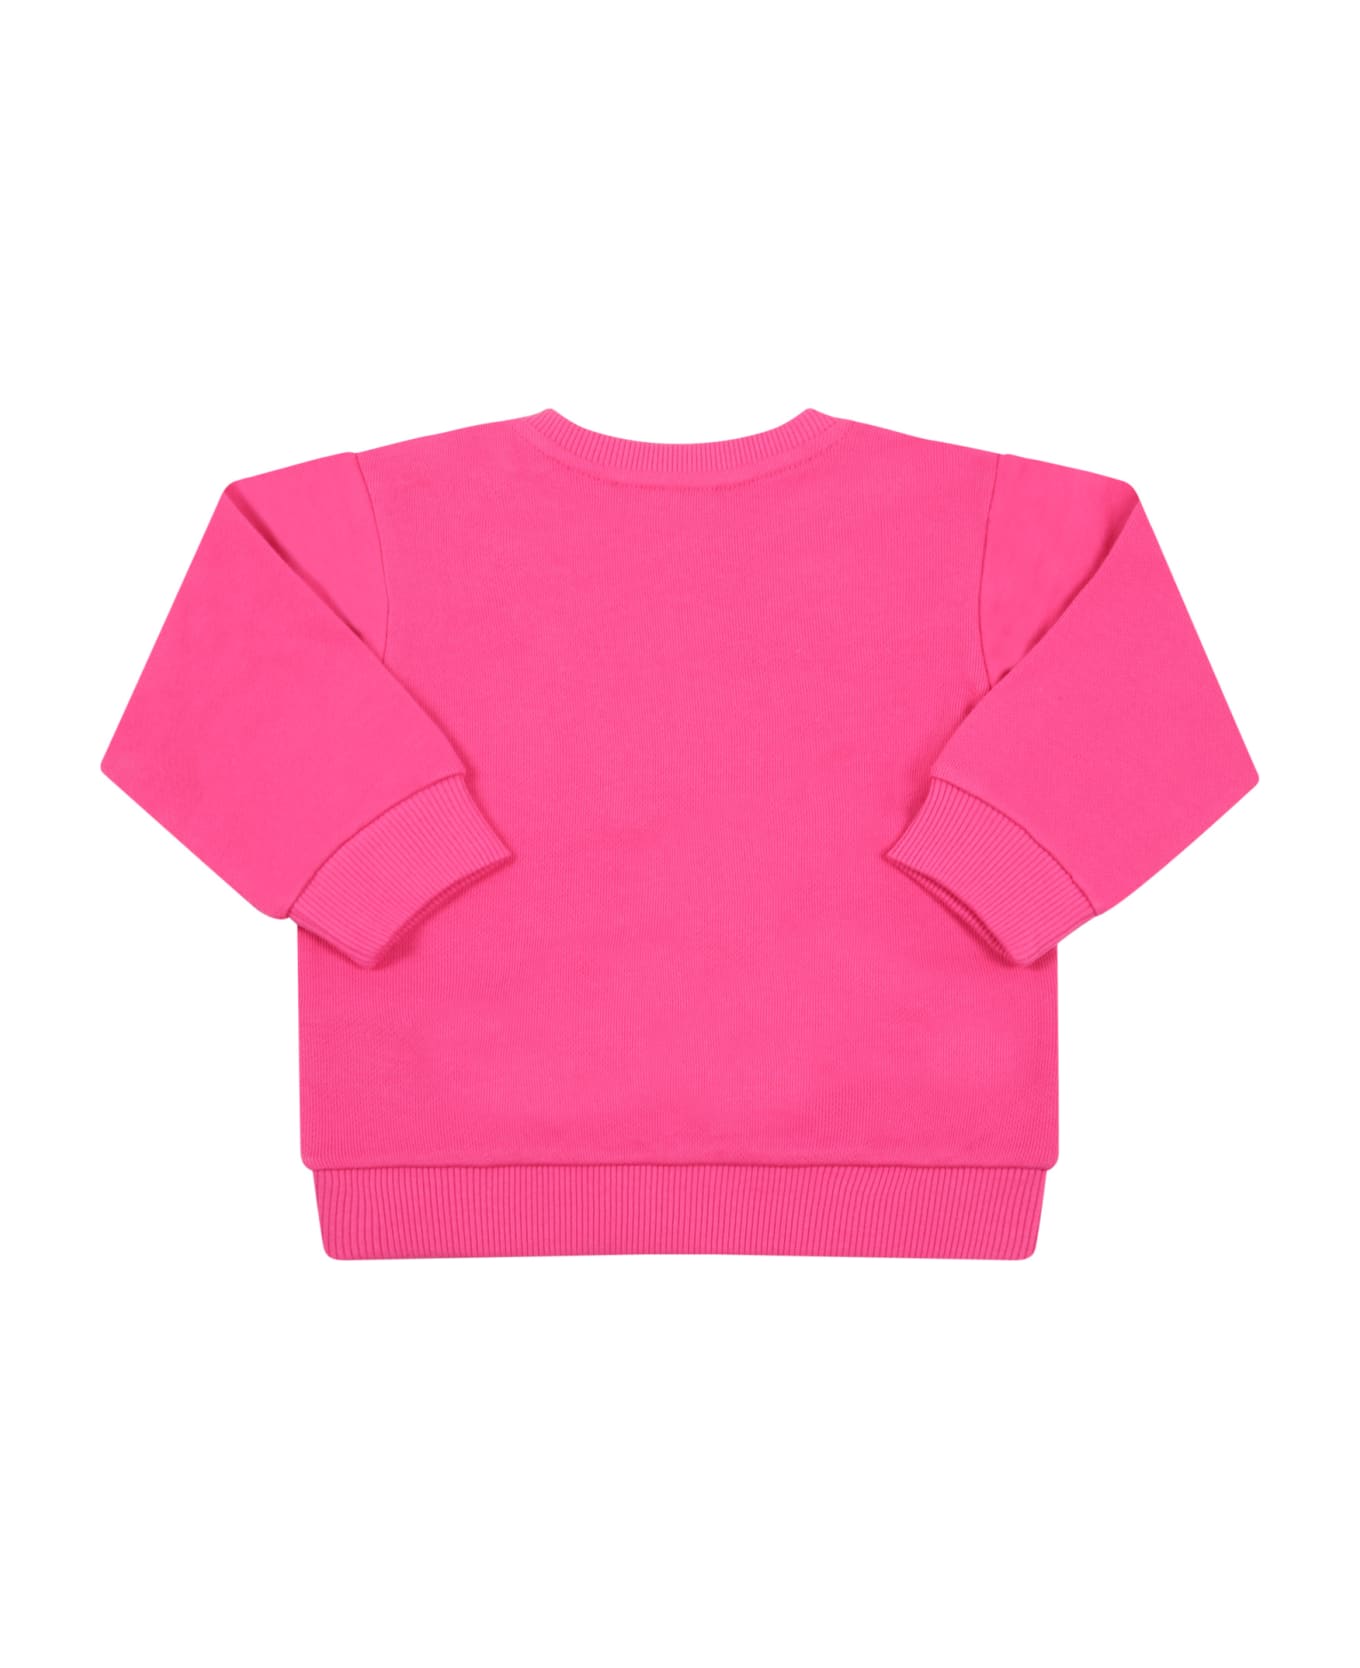 Balmain Fuchsia Sweatshirt For Baby Girl With Logos - Fuchsia